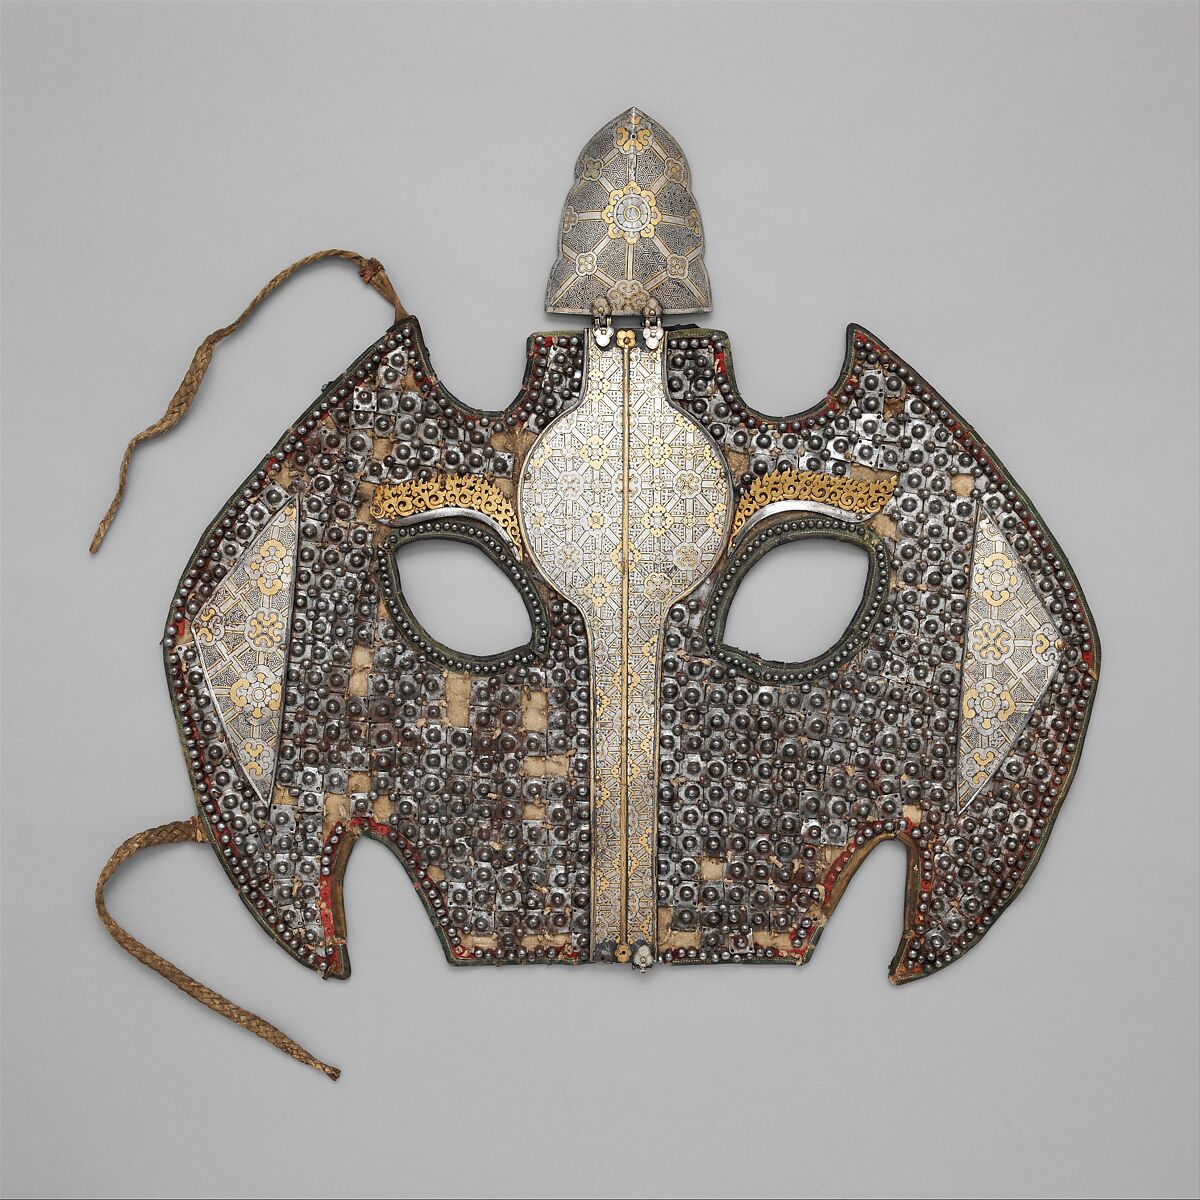 Shaffron (Horse's Head Defense), Iron, leather, gold, silver, brass or copper alloy, textile, Tibetan or Mongolian 